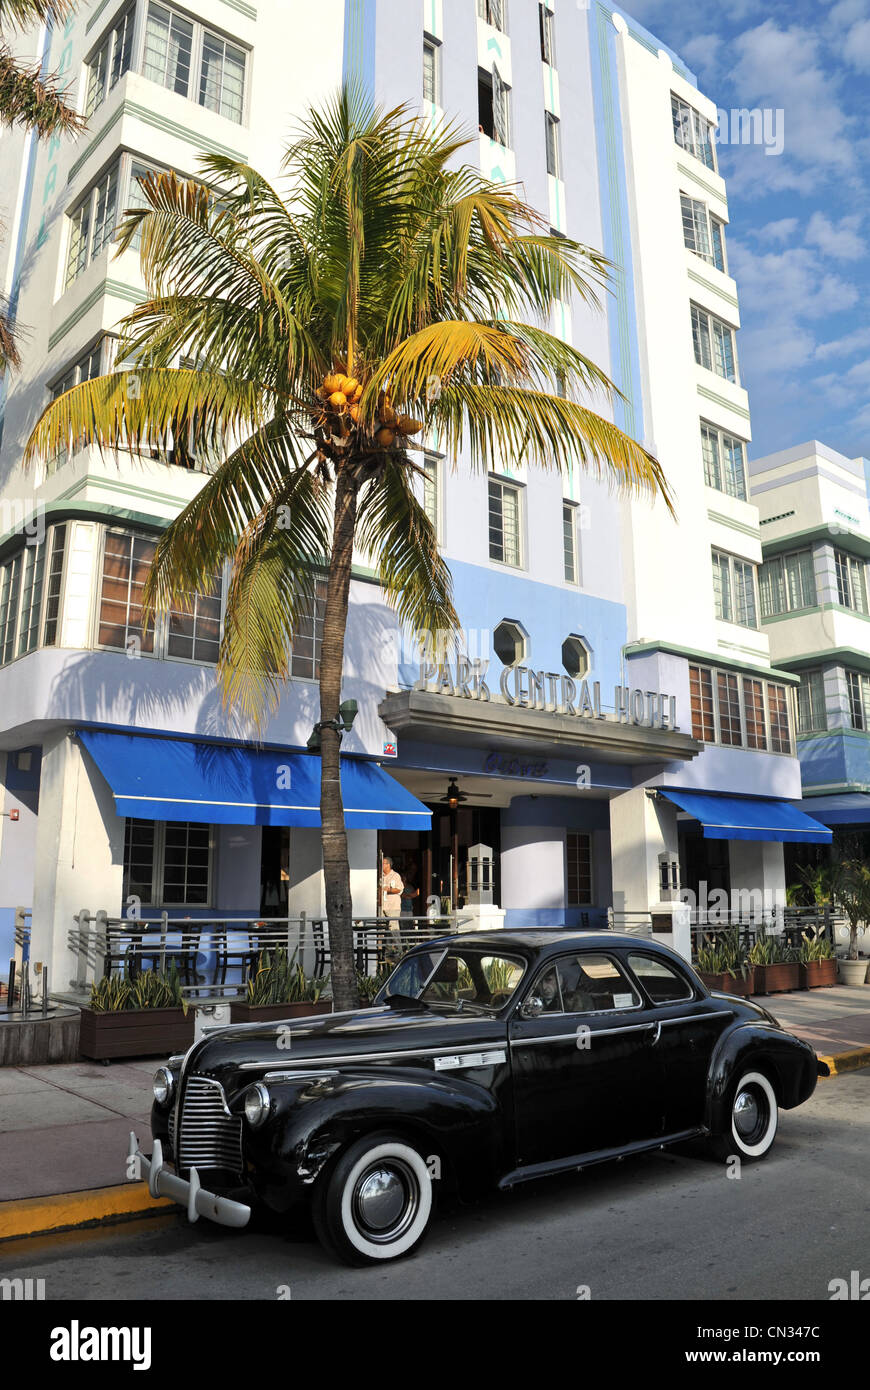 Park Central Hotel, South Beach, Miami, Florida, USA. Foto de stock